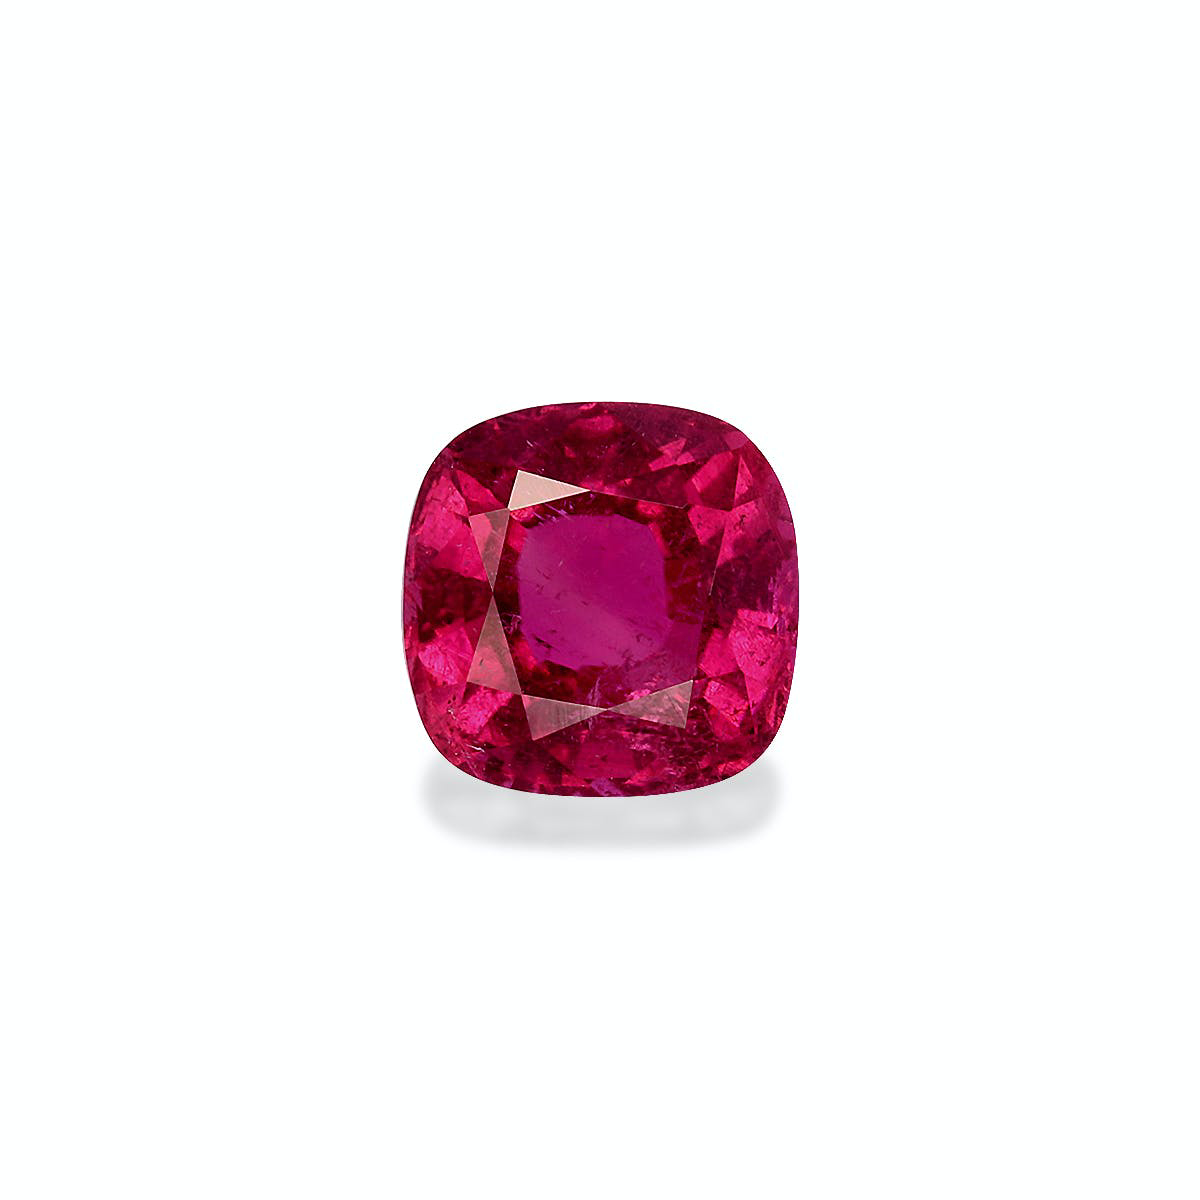 Picture of Vivid Pink Rubellite Tourmaline 1.17ct - 6mm (RL1262)